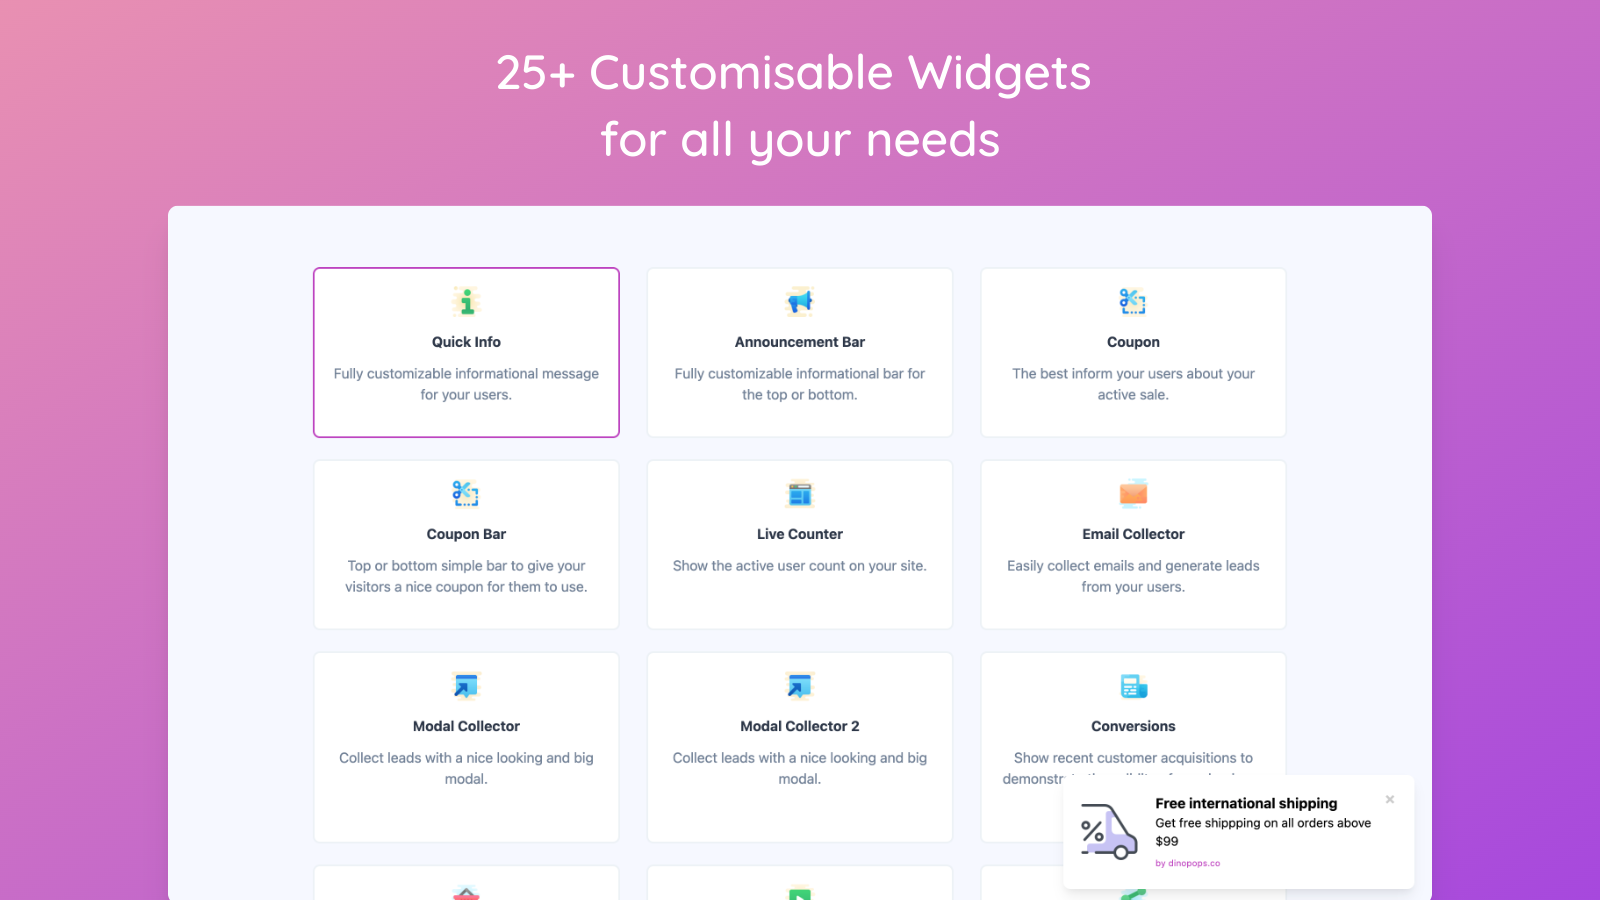 25+ Customisable Widgets